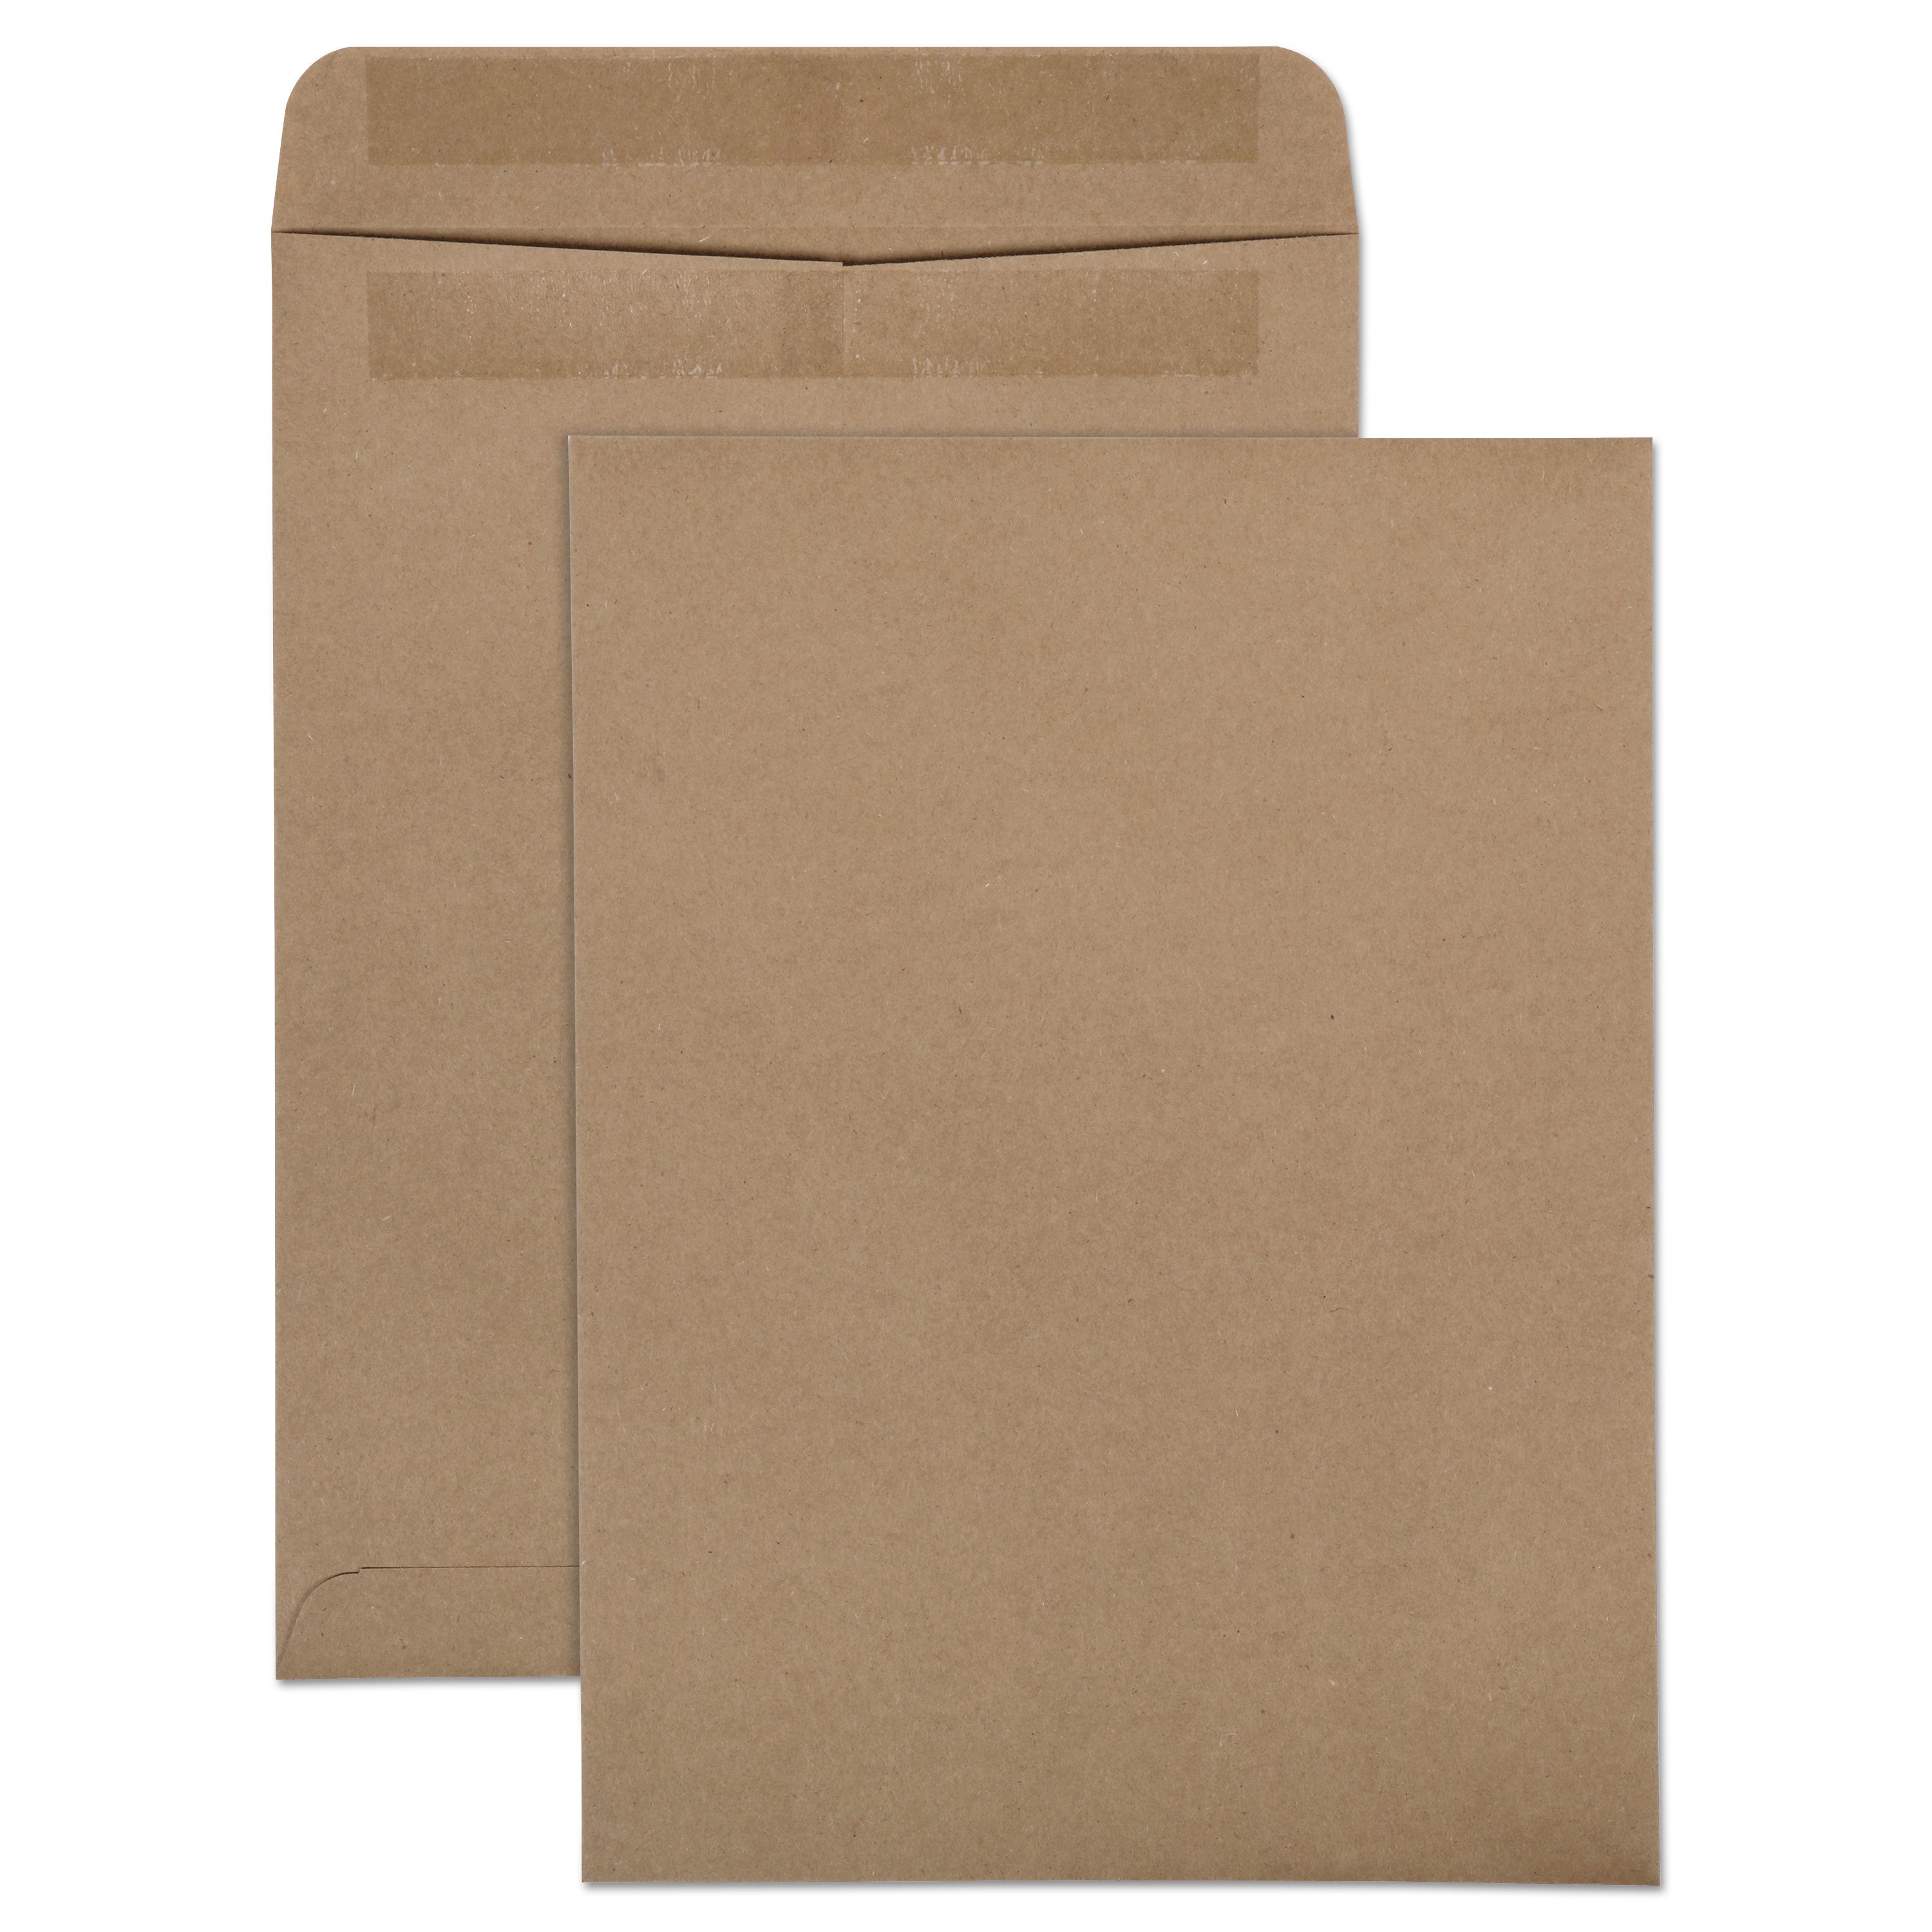 Recycled Brown Kraft Redi-Seal Envelope, #10 1/2, Cheese Blade Flap, Redi-Seal Adhesive Closure, 9 x 12, Brown Kraft, 100/Box - 